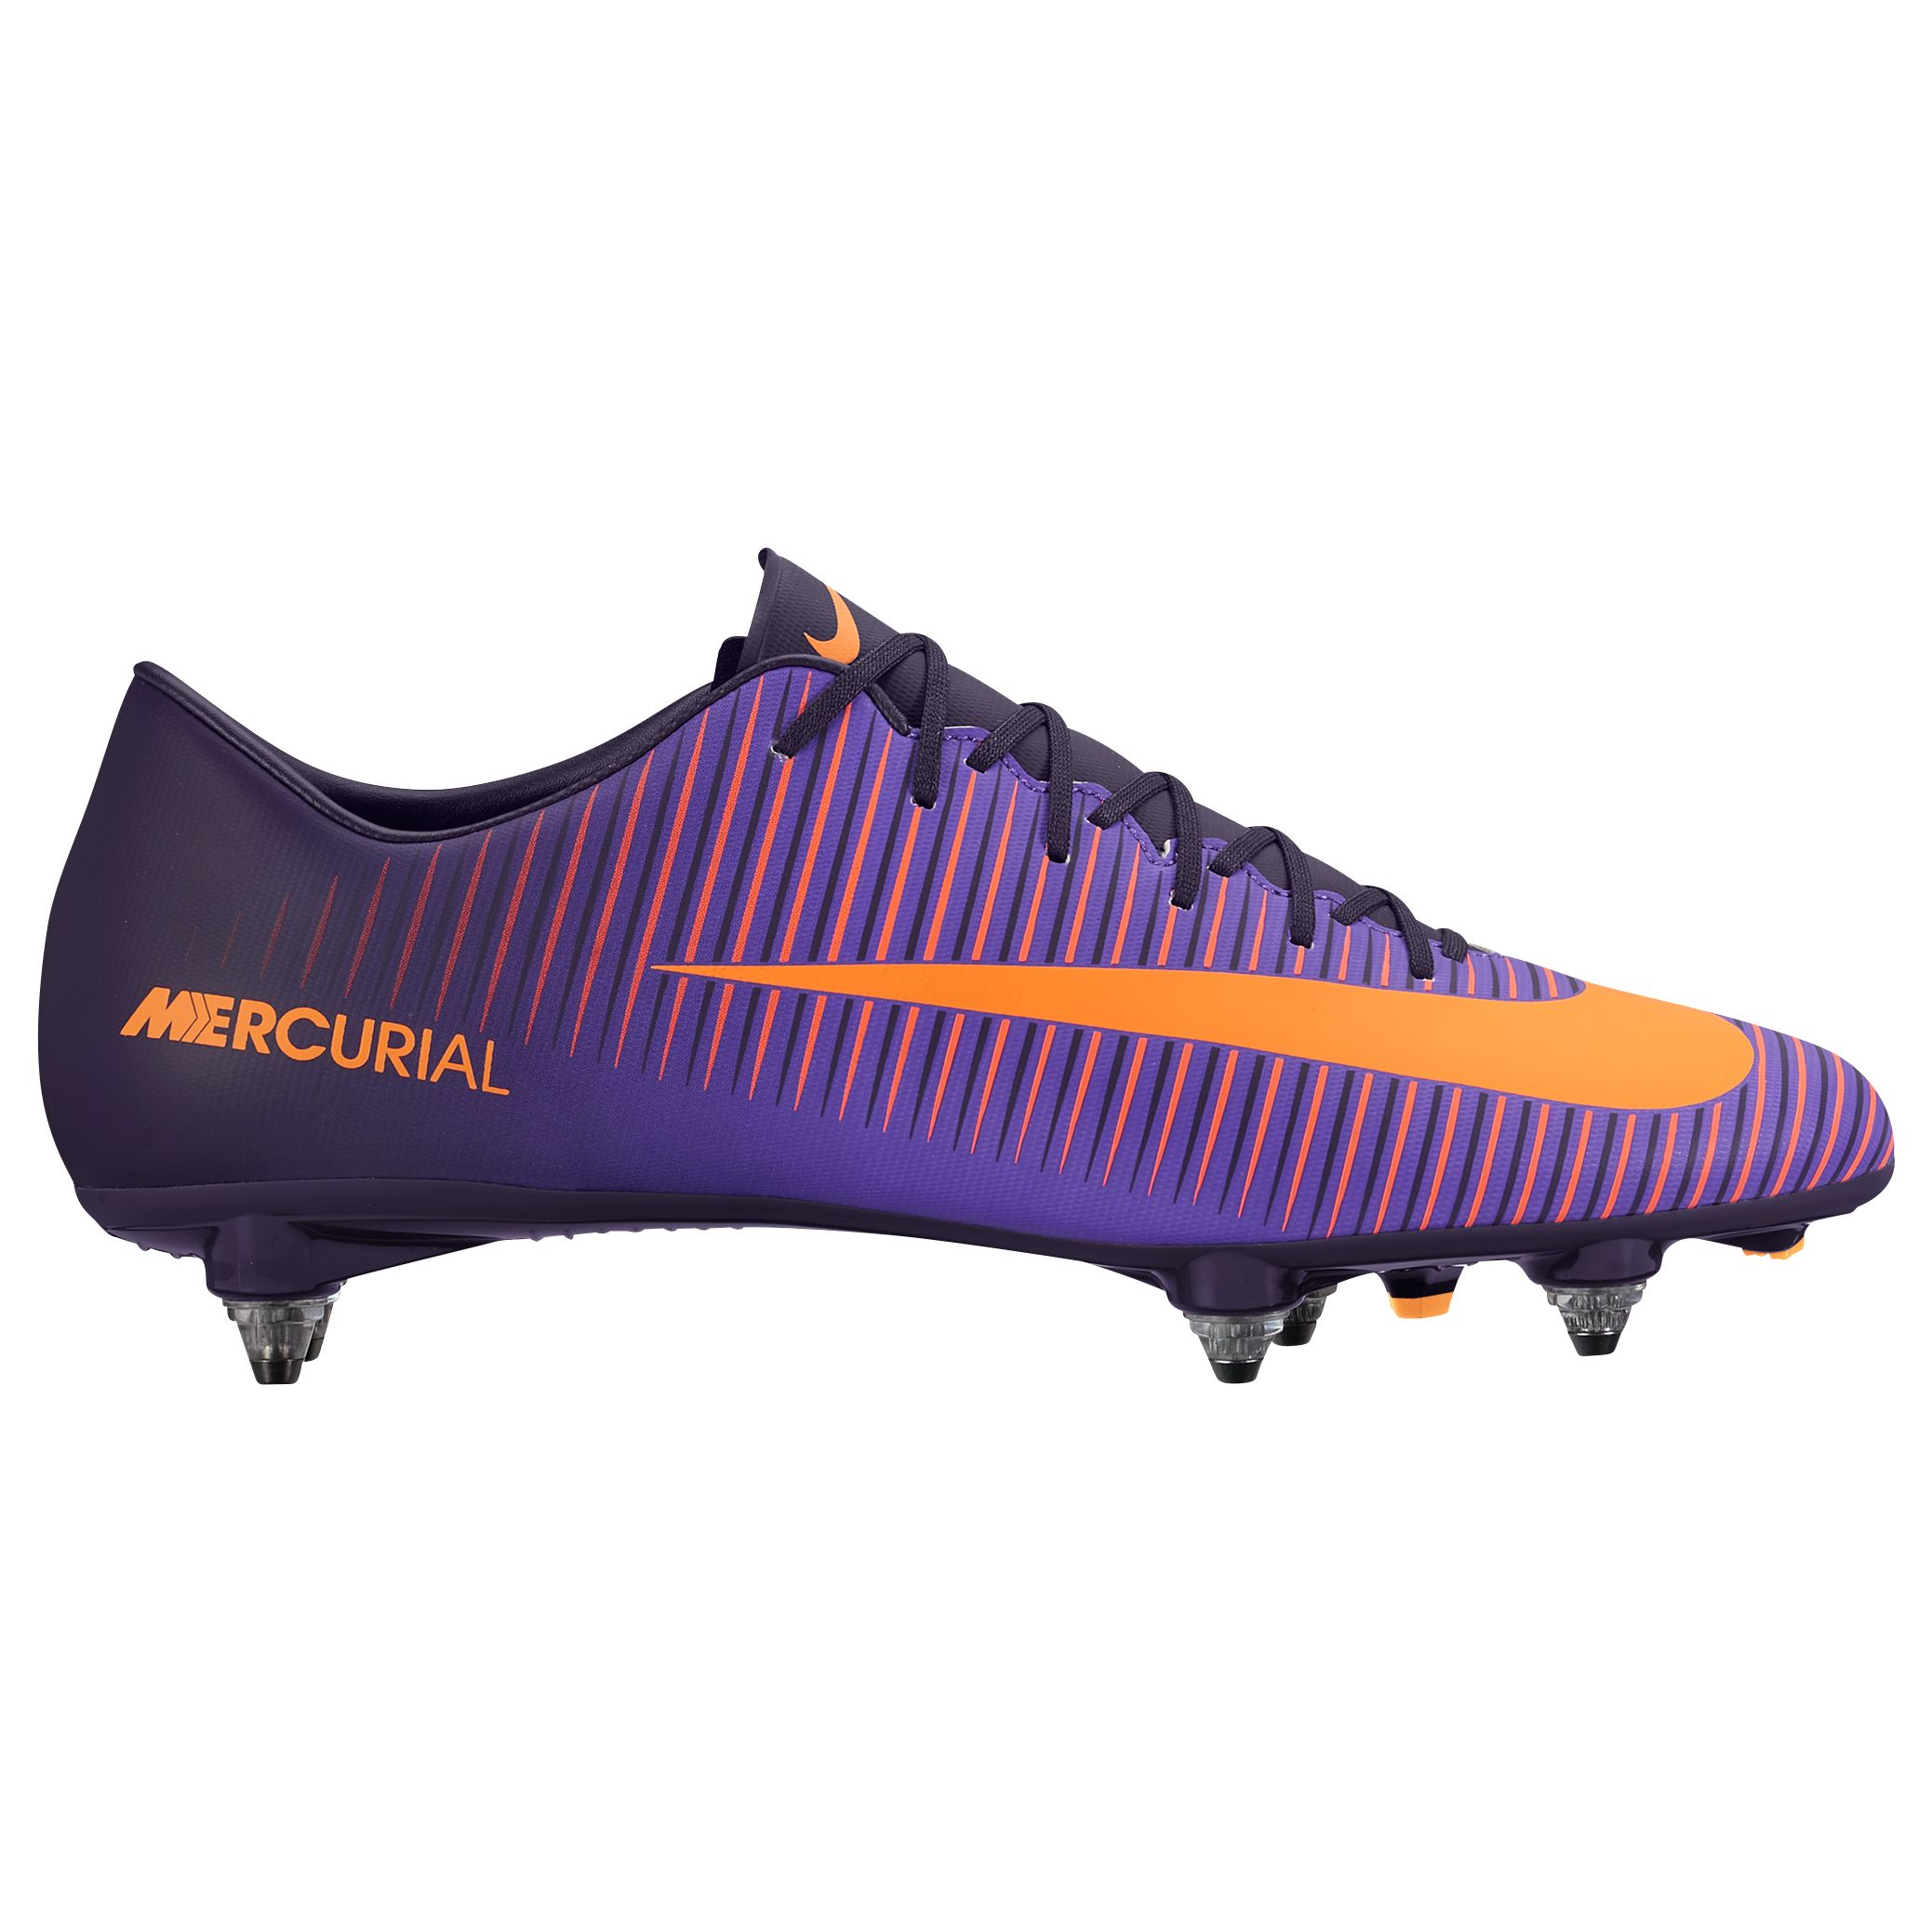 nike boots purple